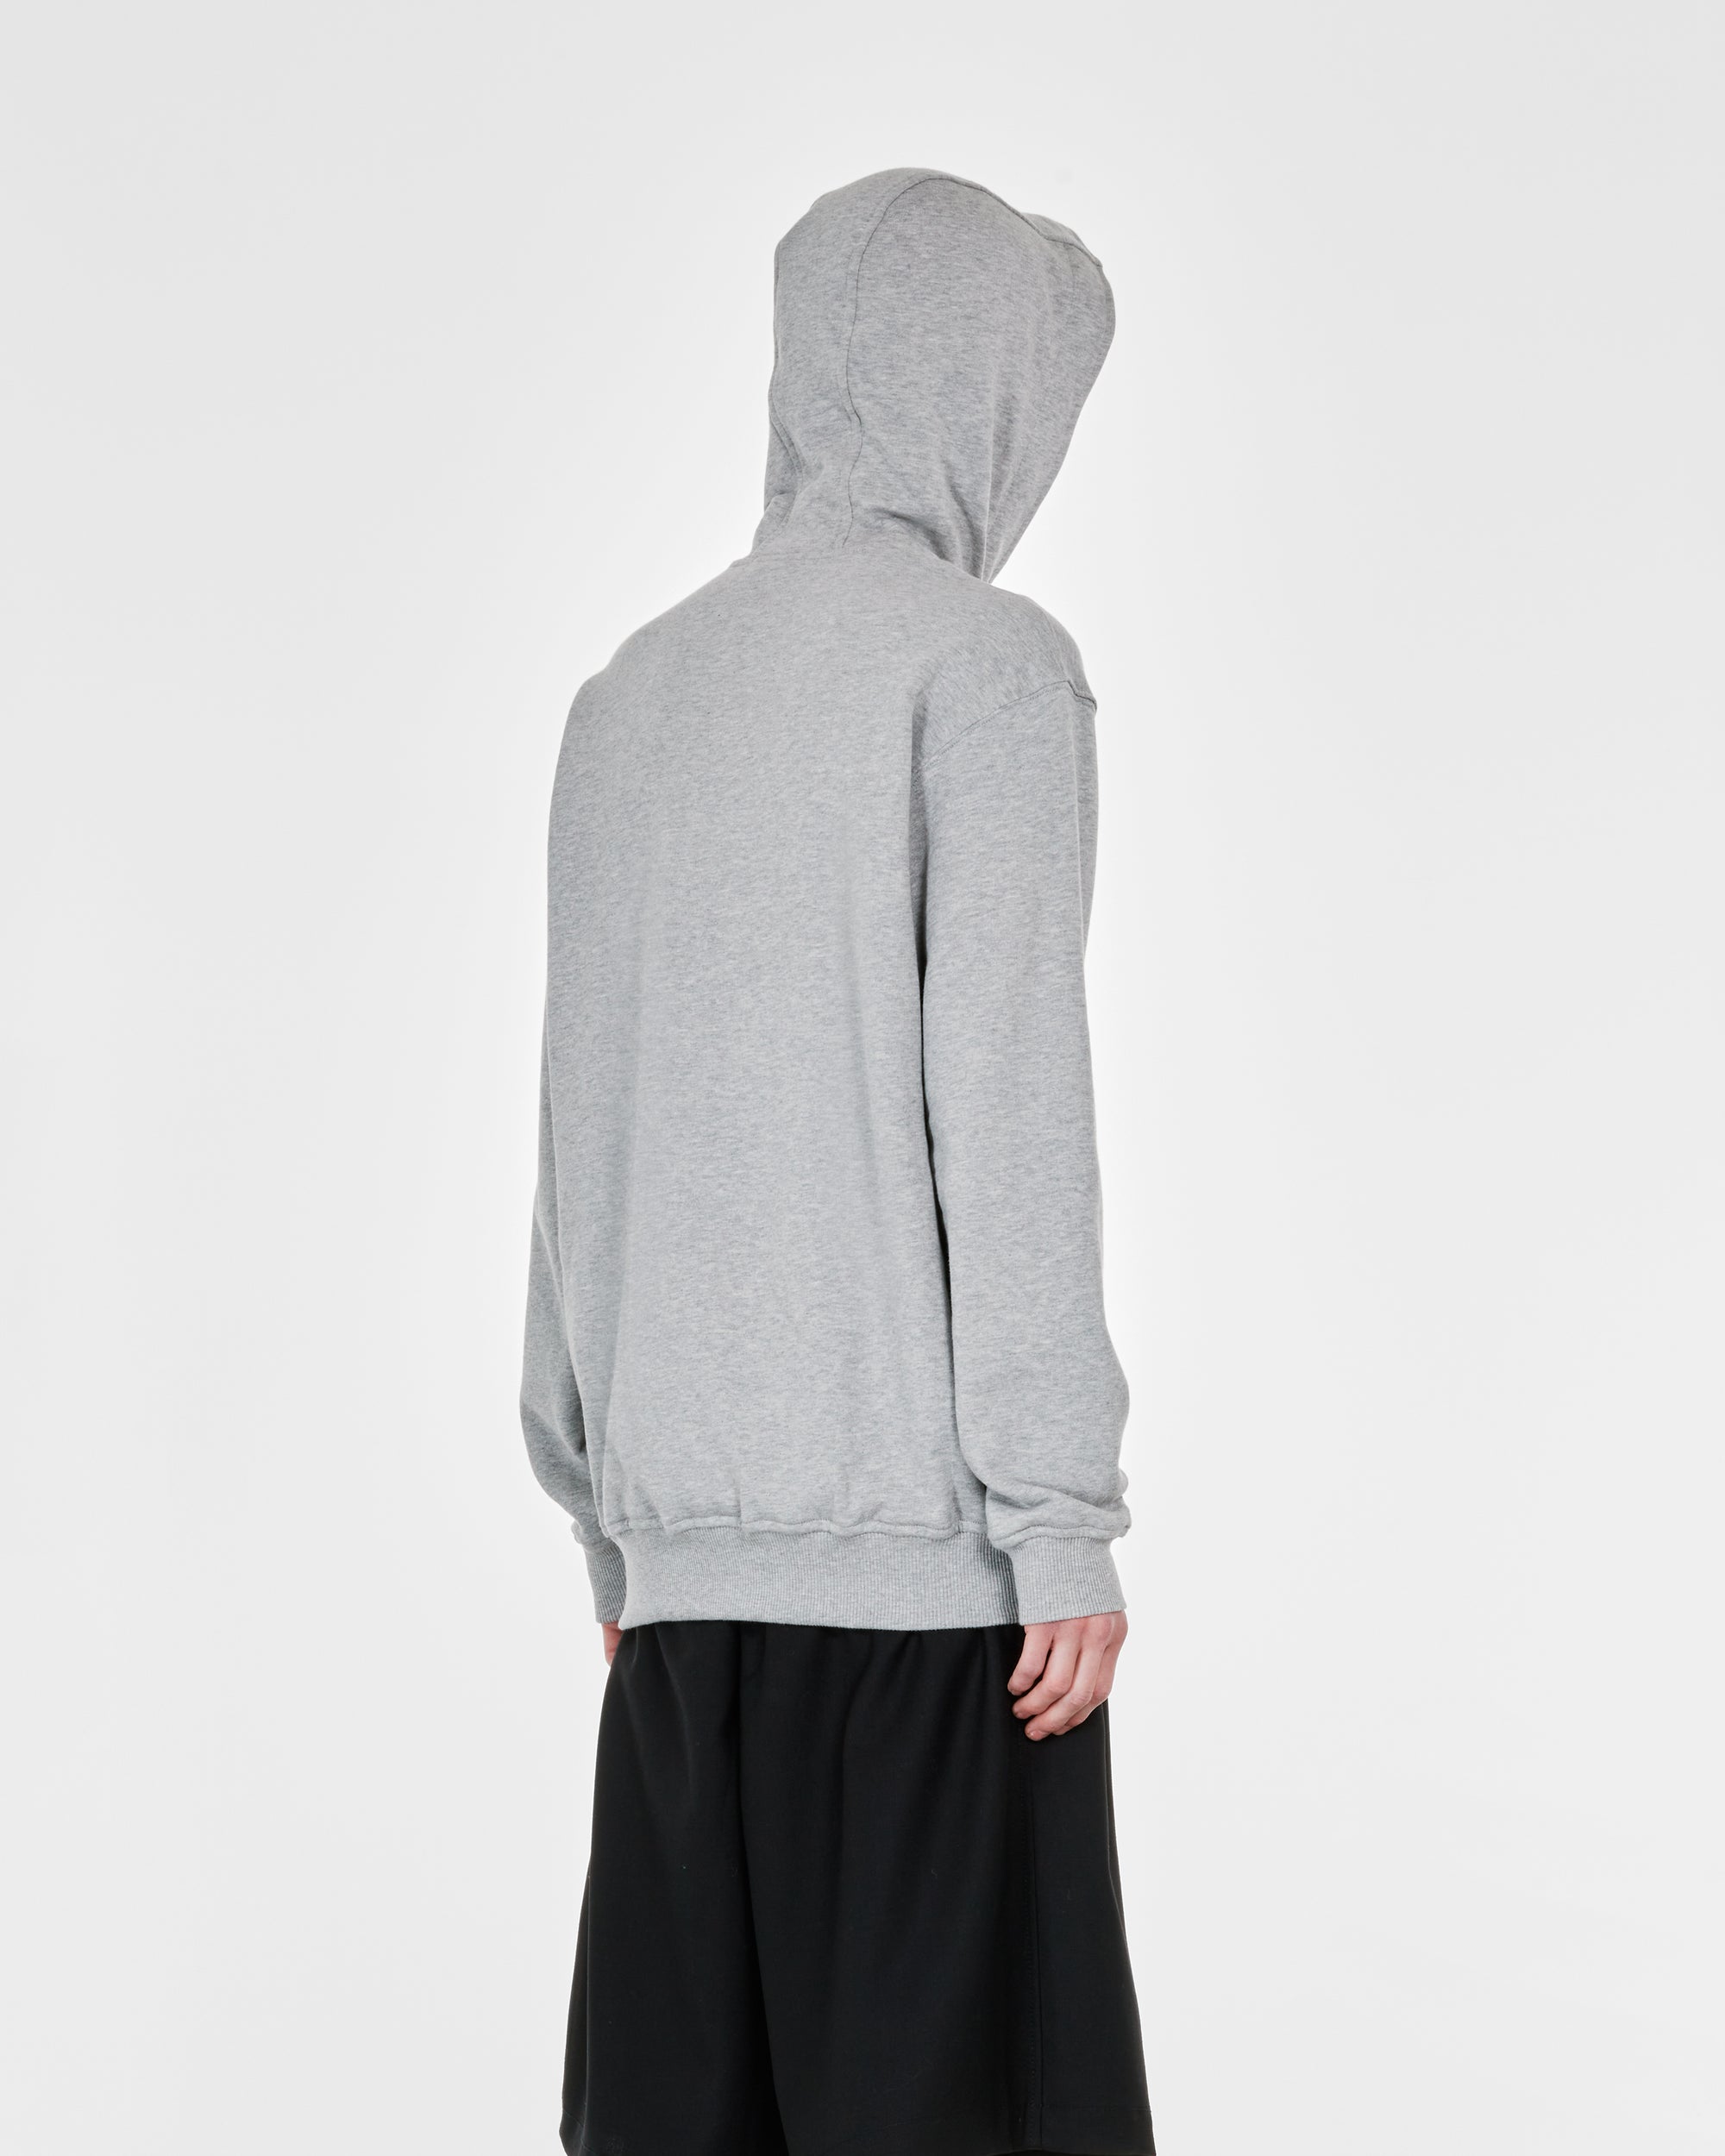 CDG Shirt - Andy Warhol Men's Hooded Sweatshirt - (Grey/Print H) view 4